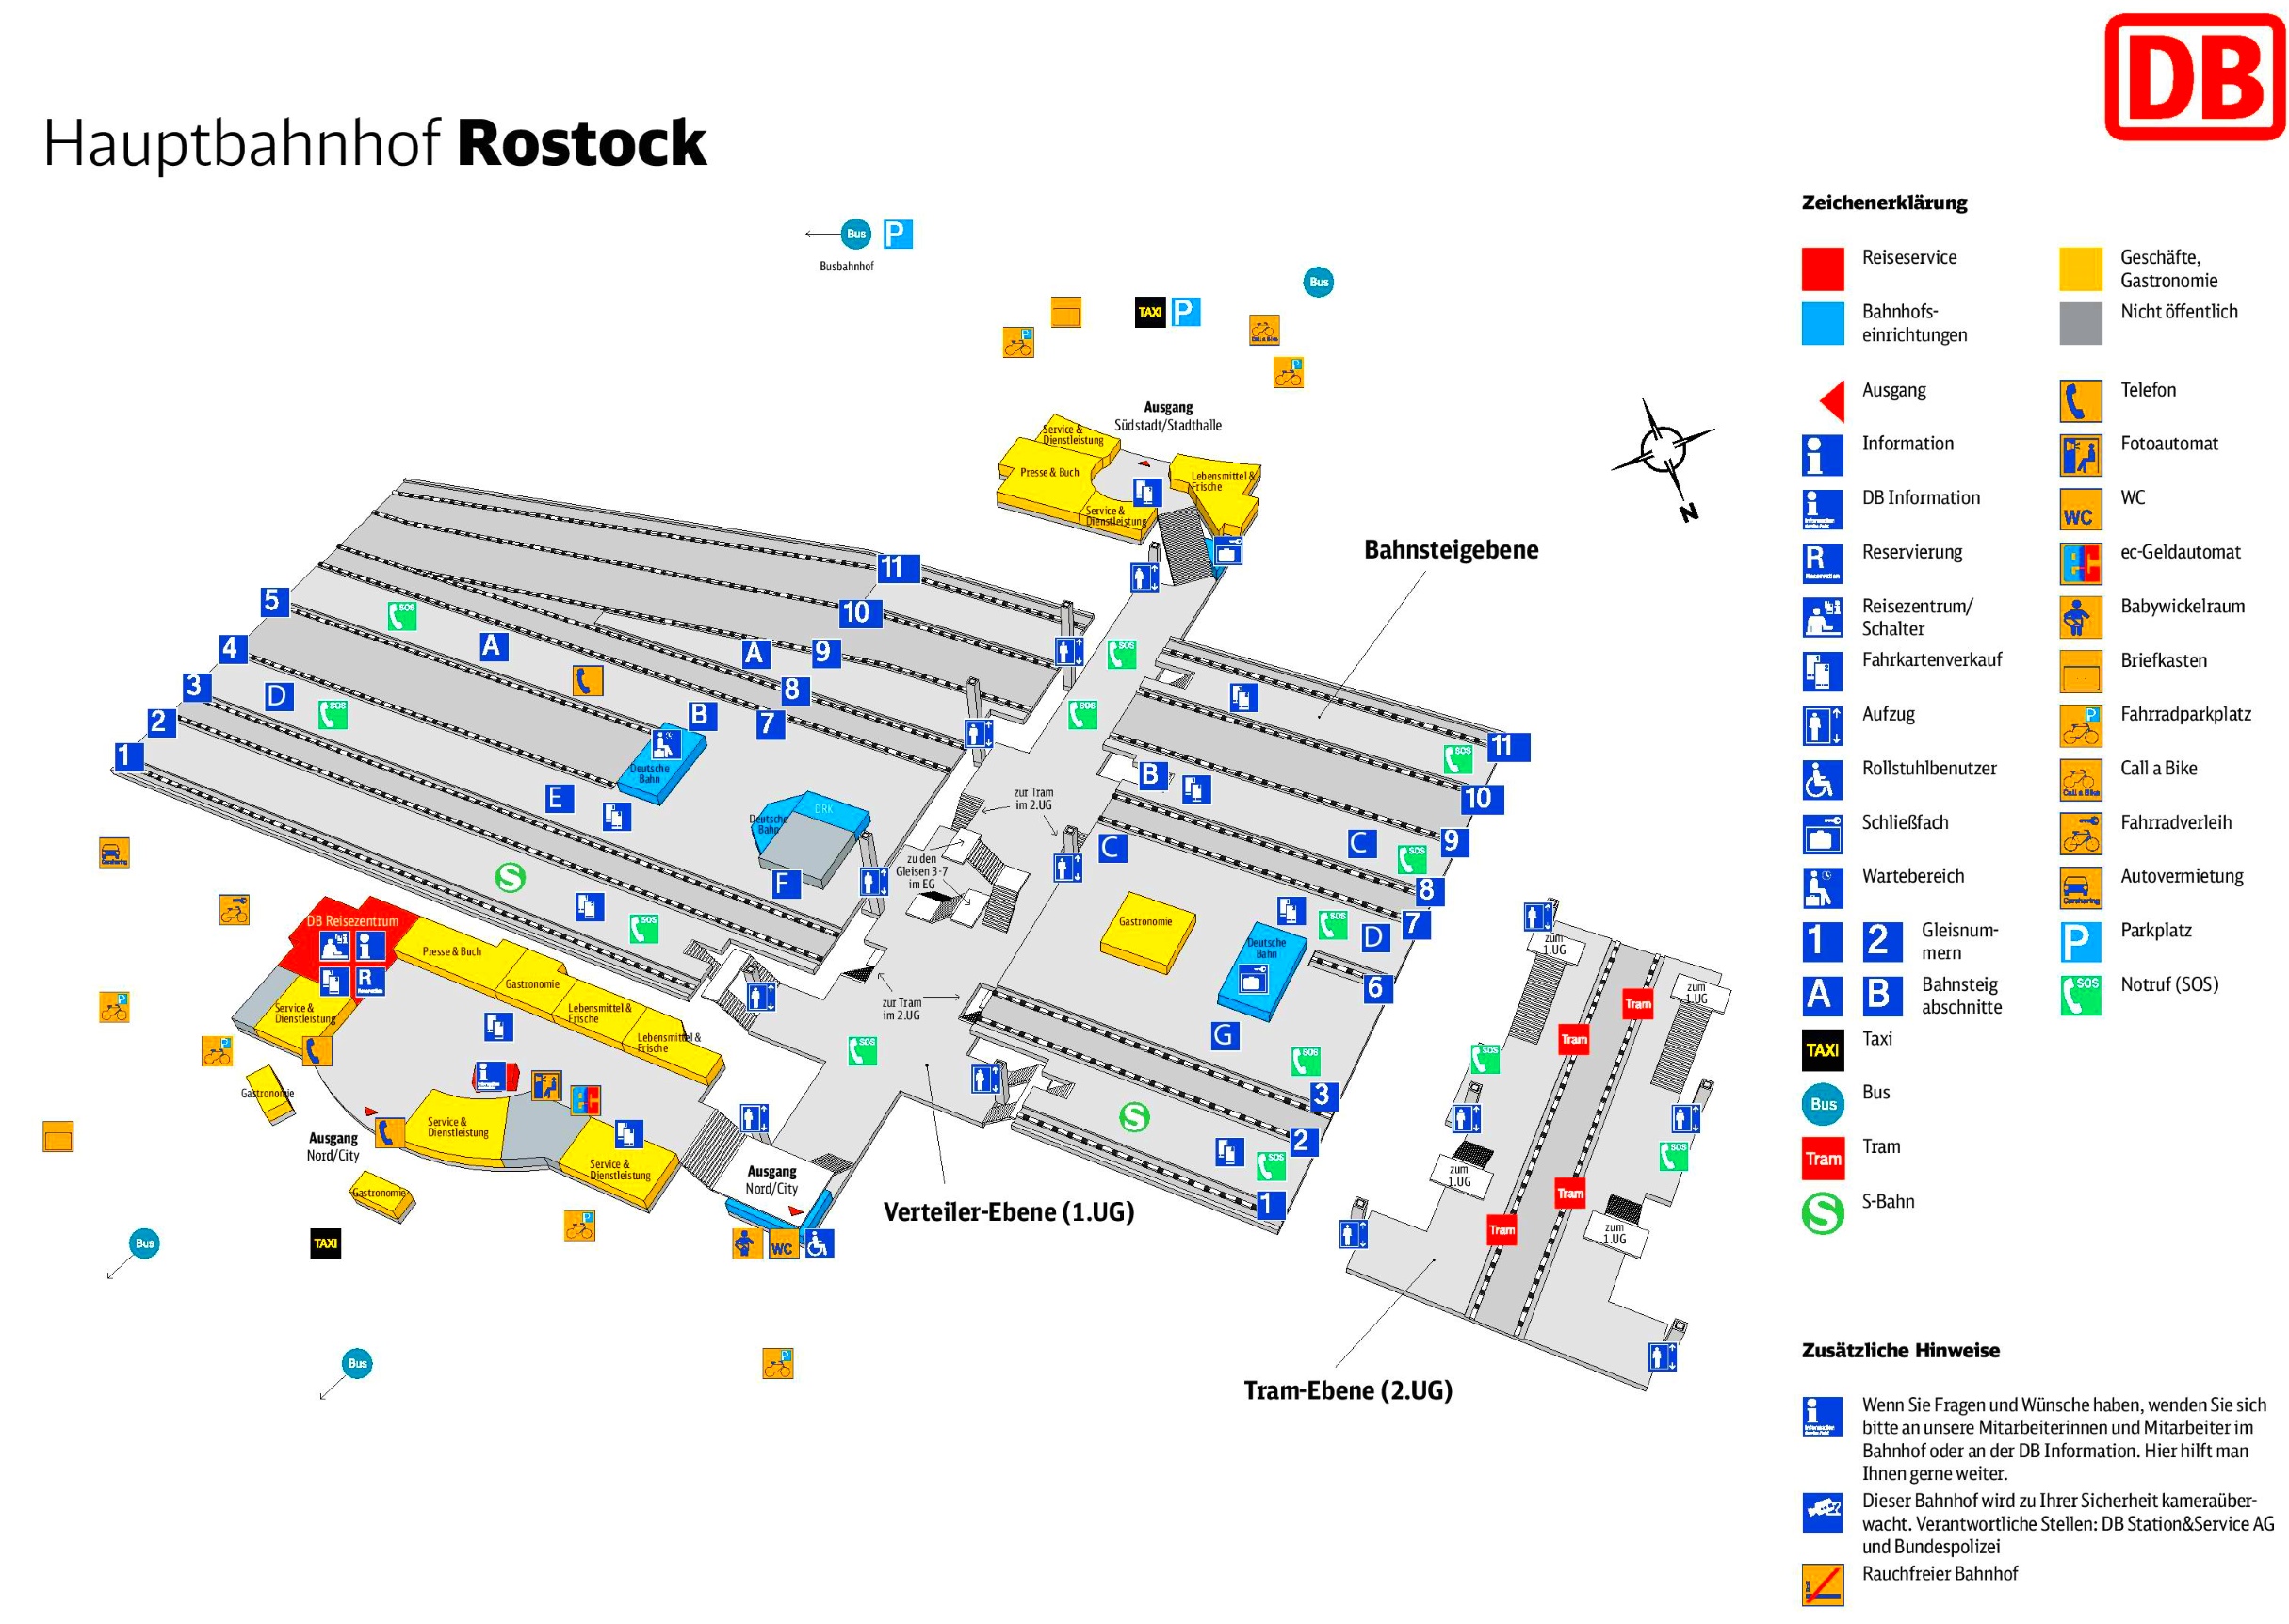 Rostock hauptbahnhof map - Ontheworldmap.com